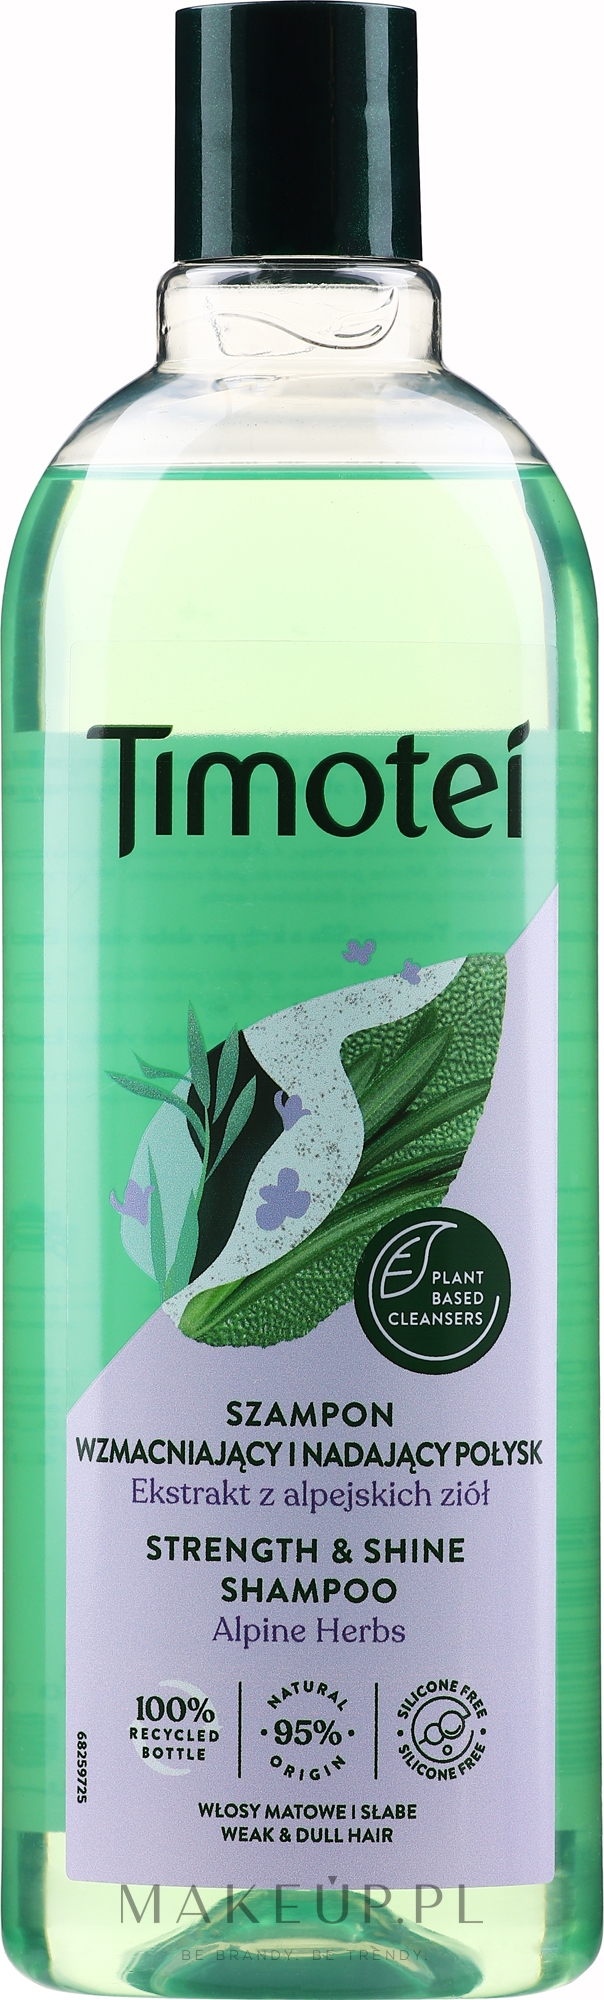 2018 timotei szampon polska firma